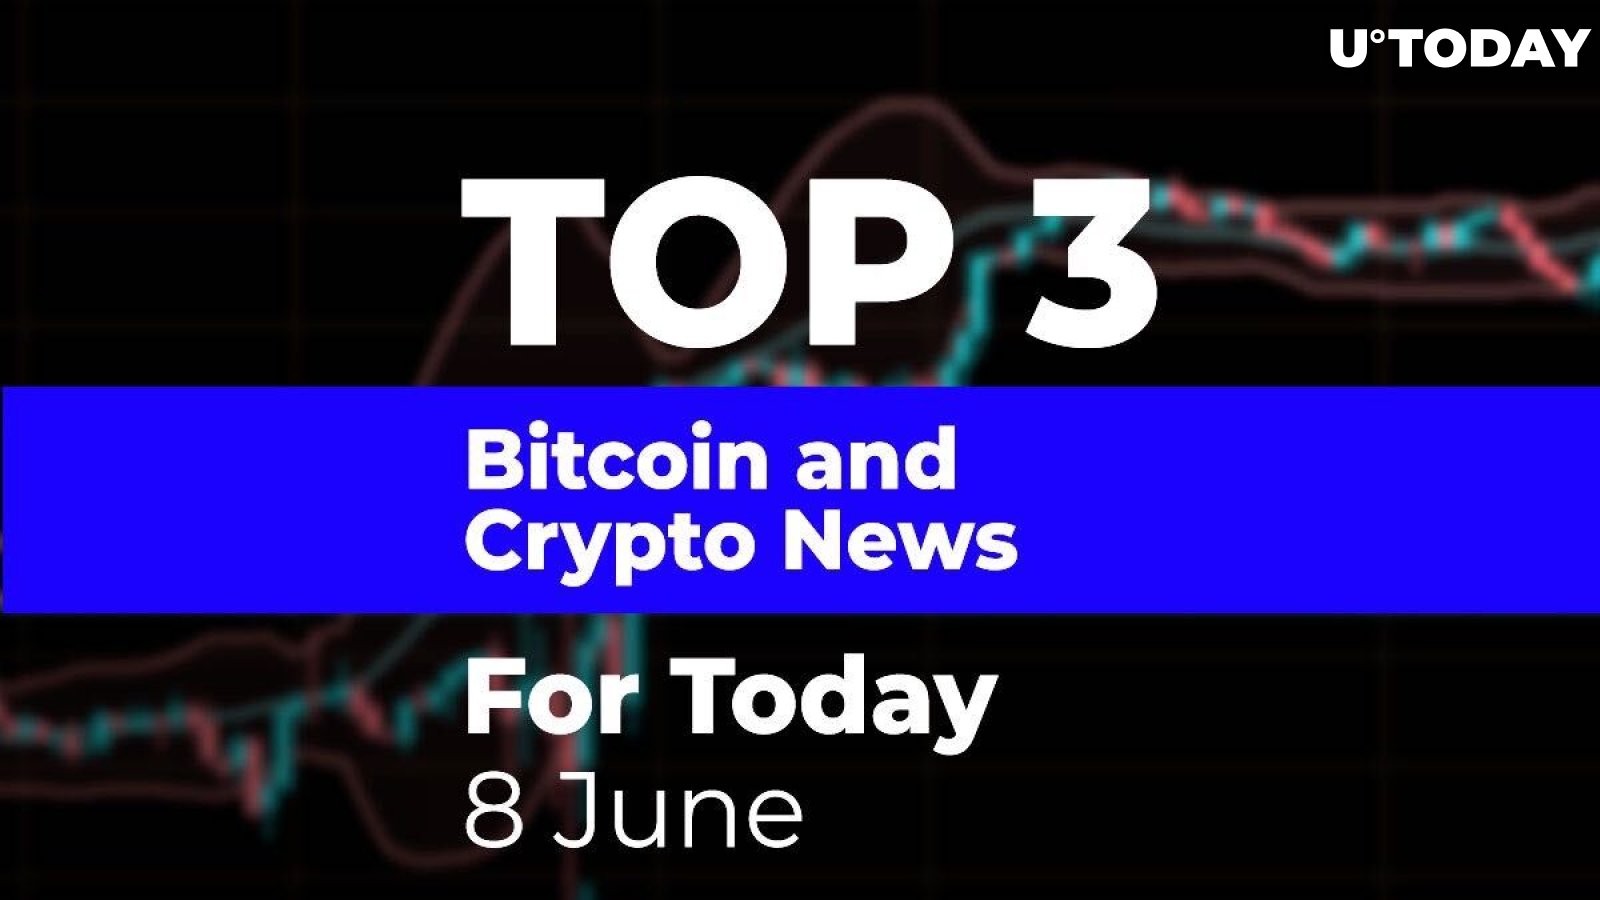 TOP 3 Bitcoin and Crypto News for Today: 08 June – ETH Analysis, CoinMarketCap’s New Rankings, & SAMA Deploys Blockchain